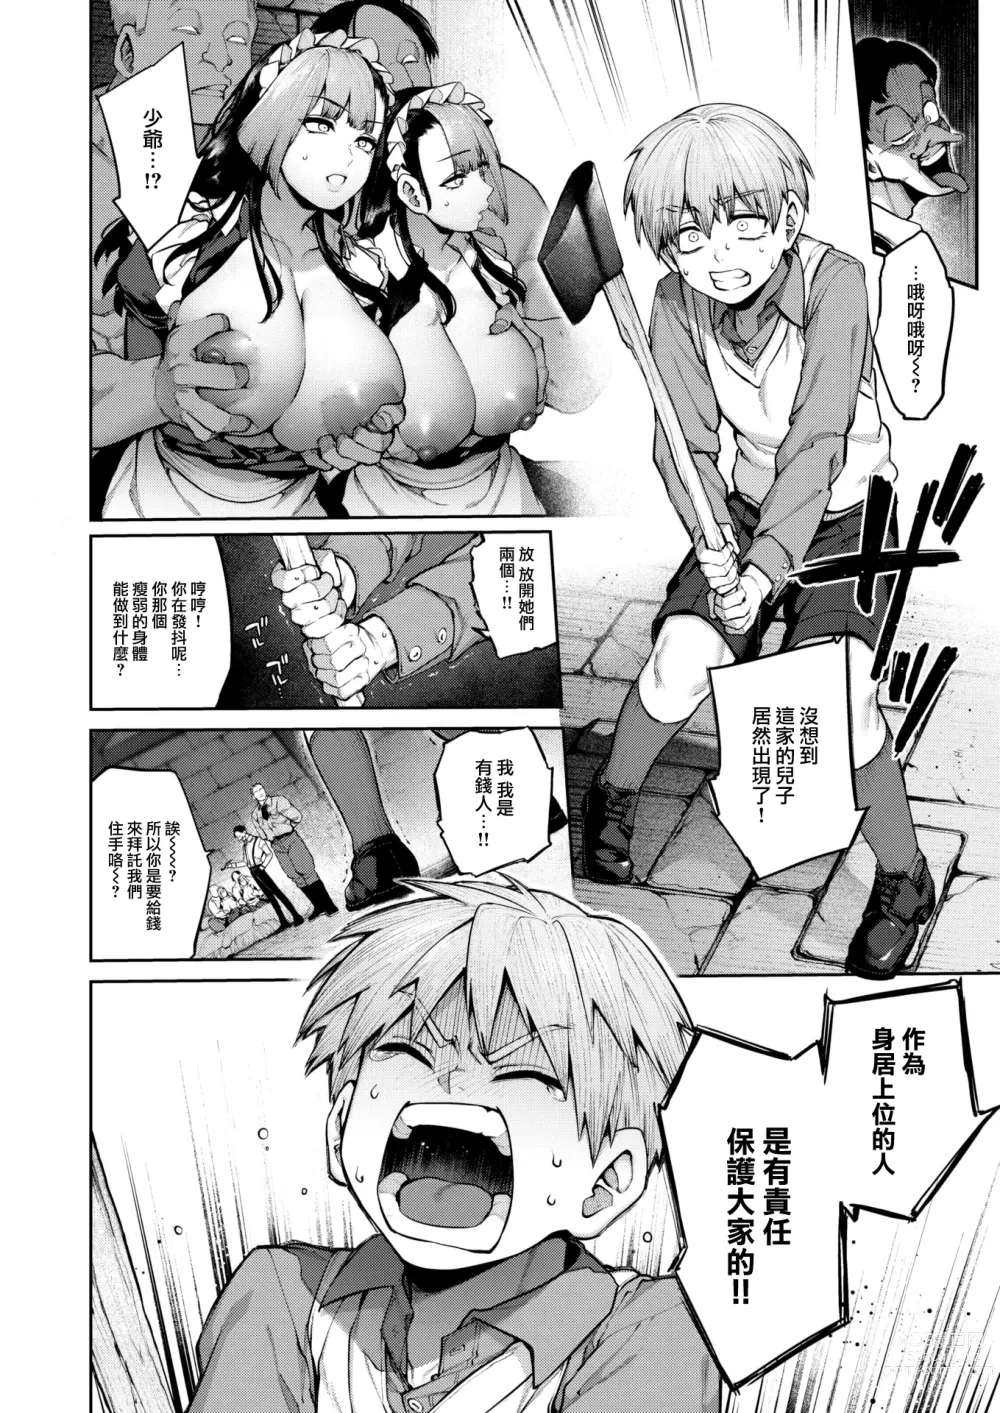 Page 9 of manga Order·Maid!